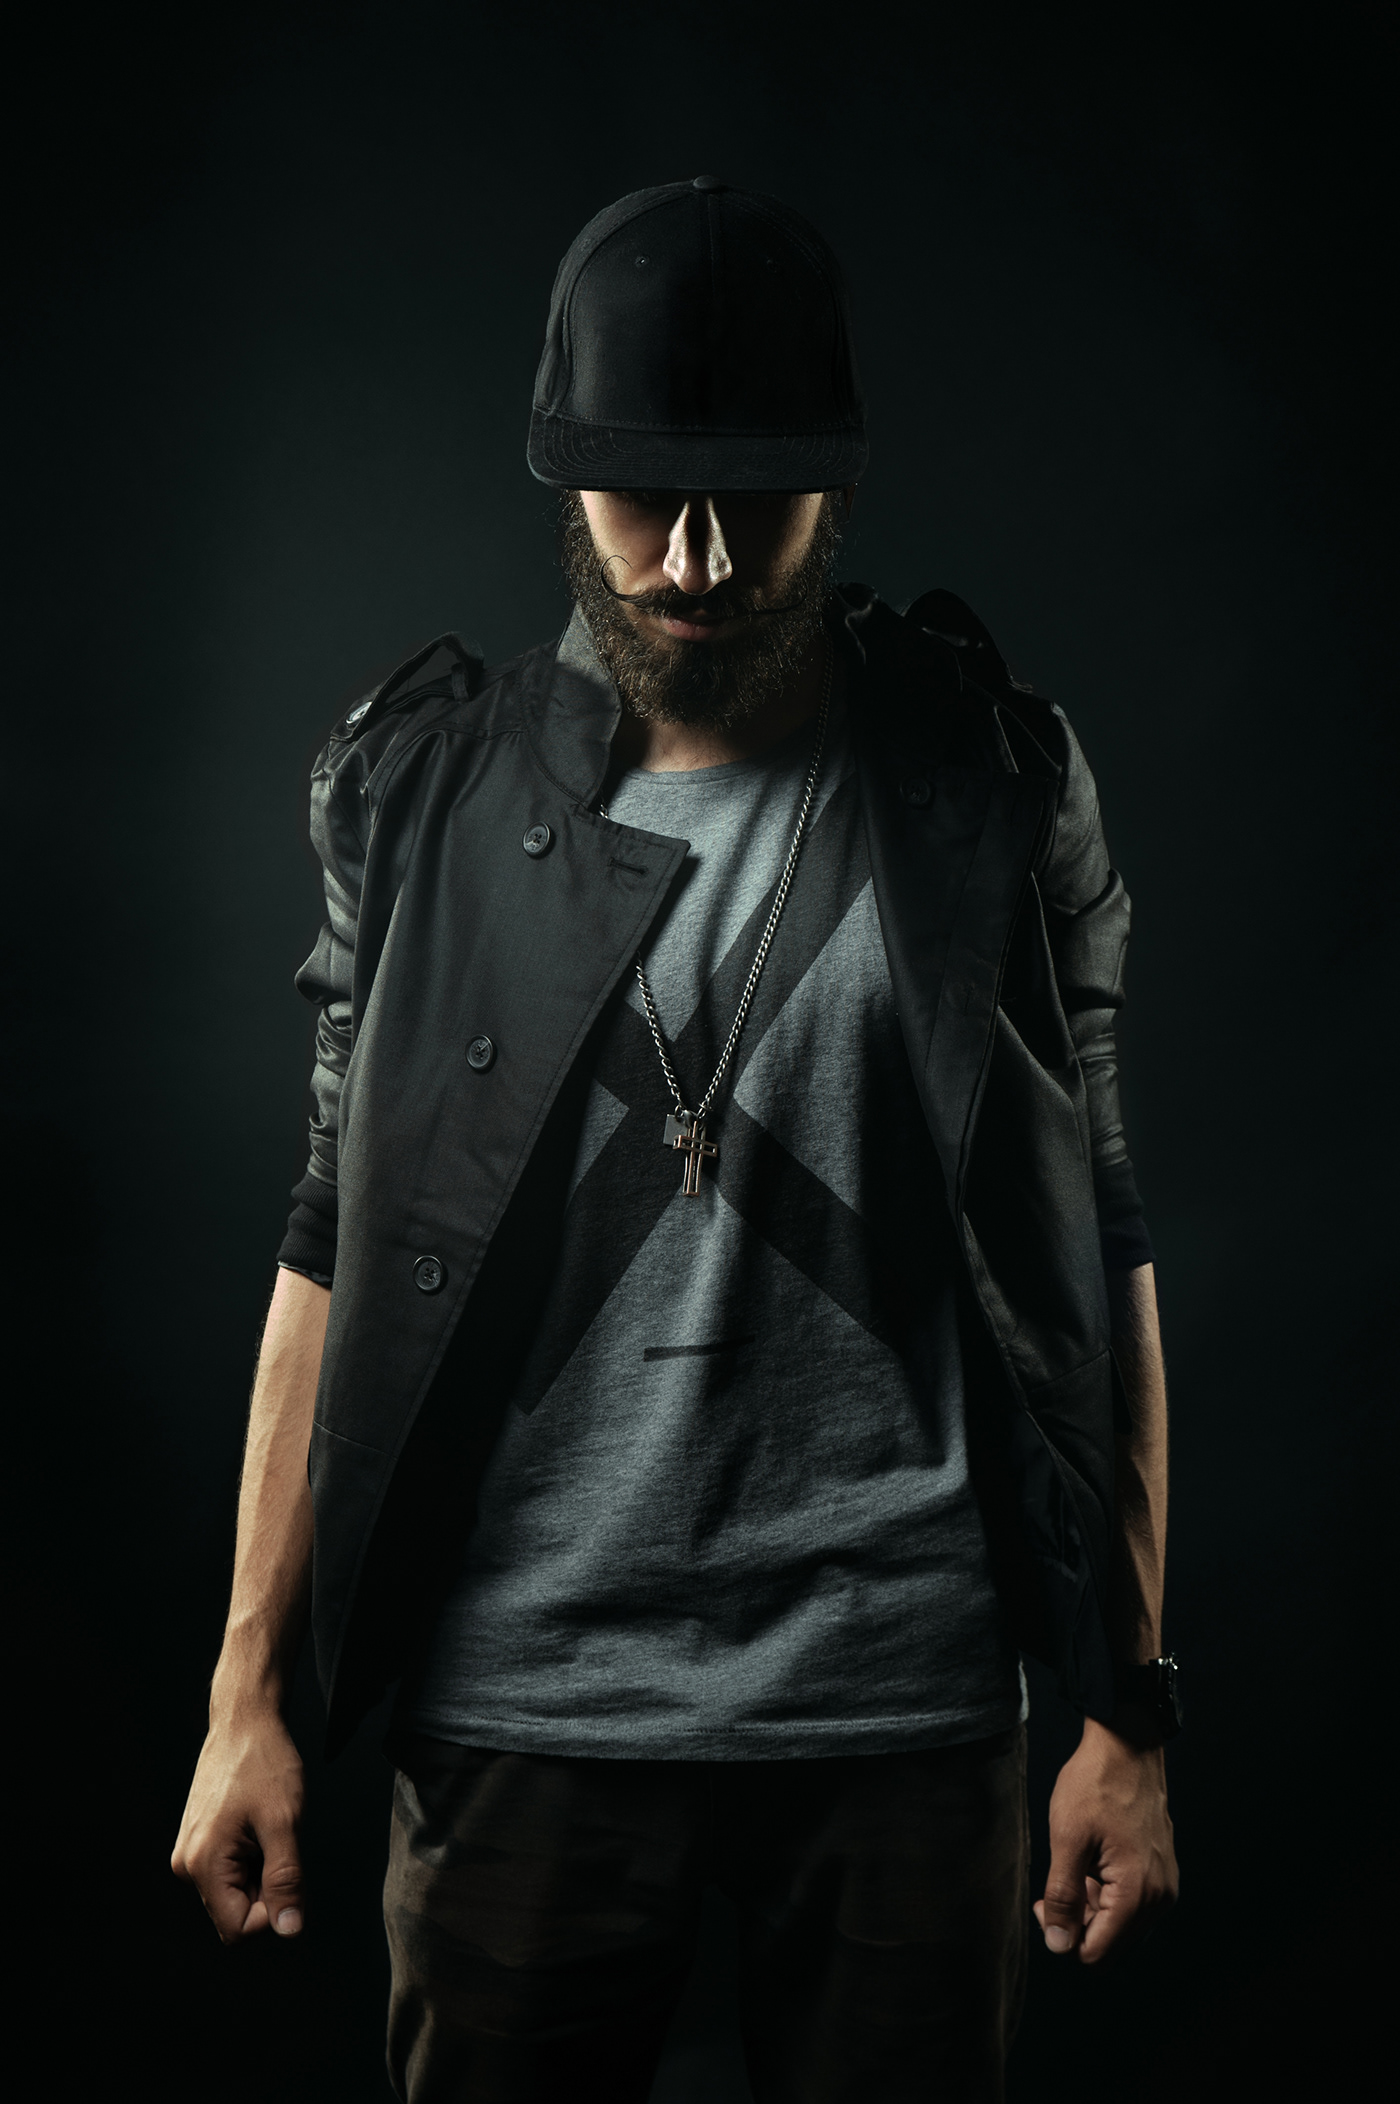 beard moustache bowler hat hat Sunglasses man portrait dark black studio